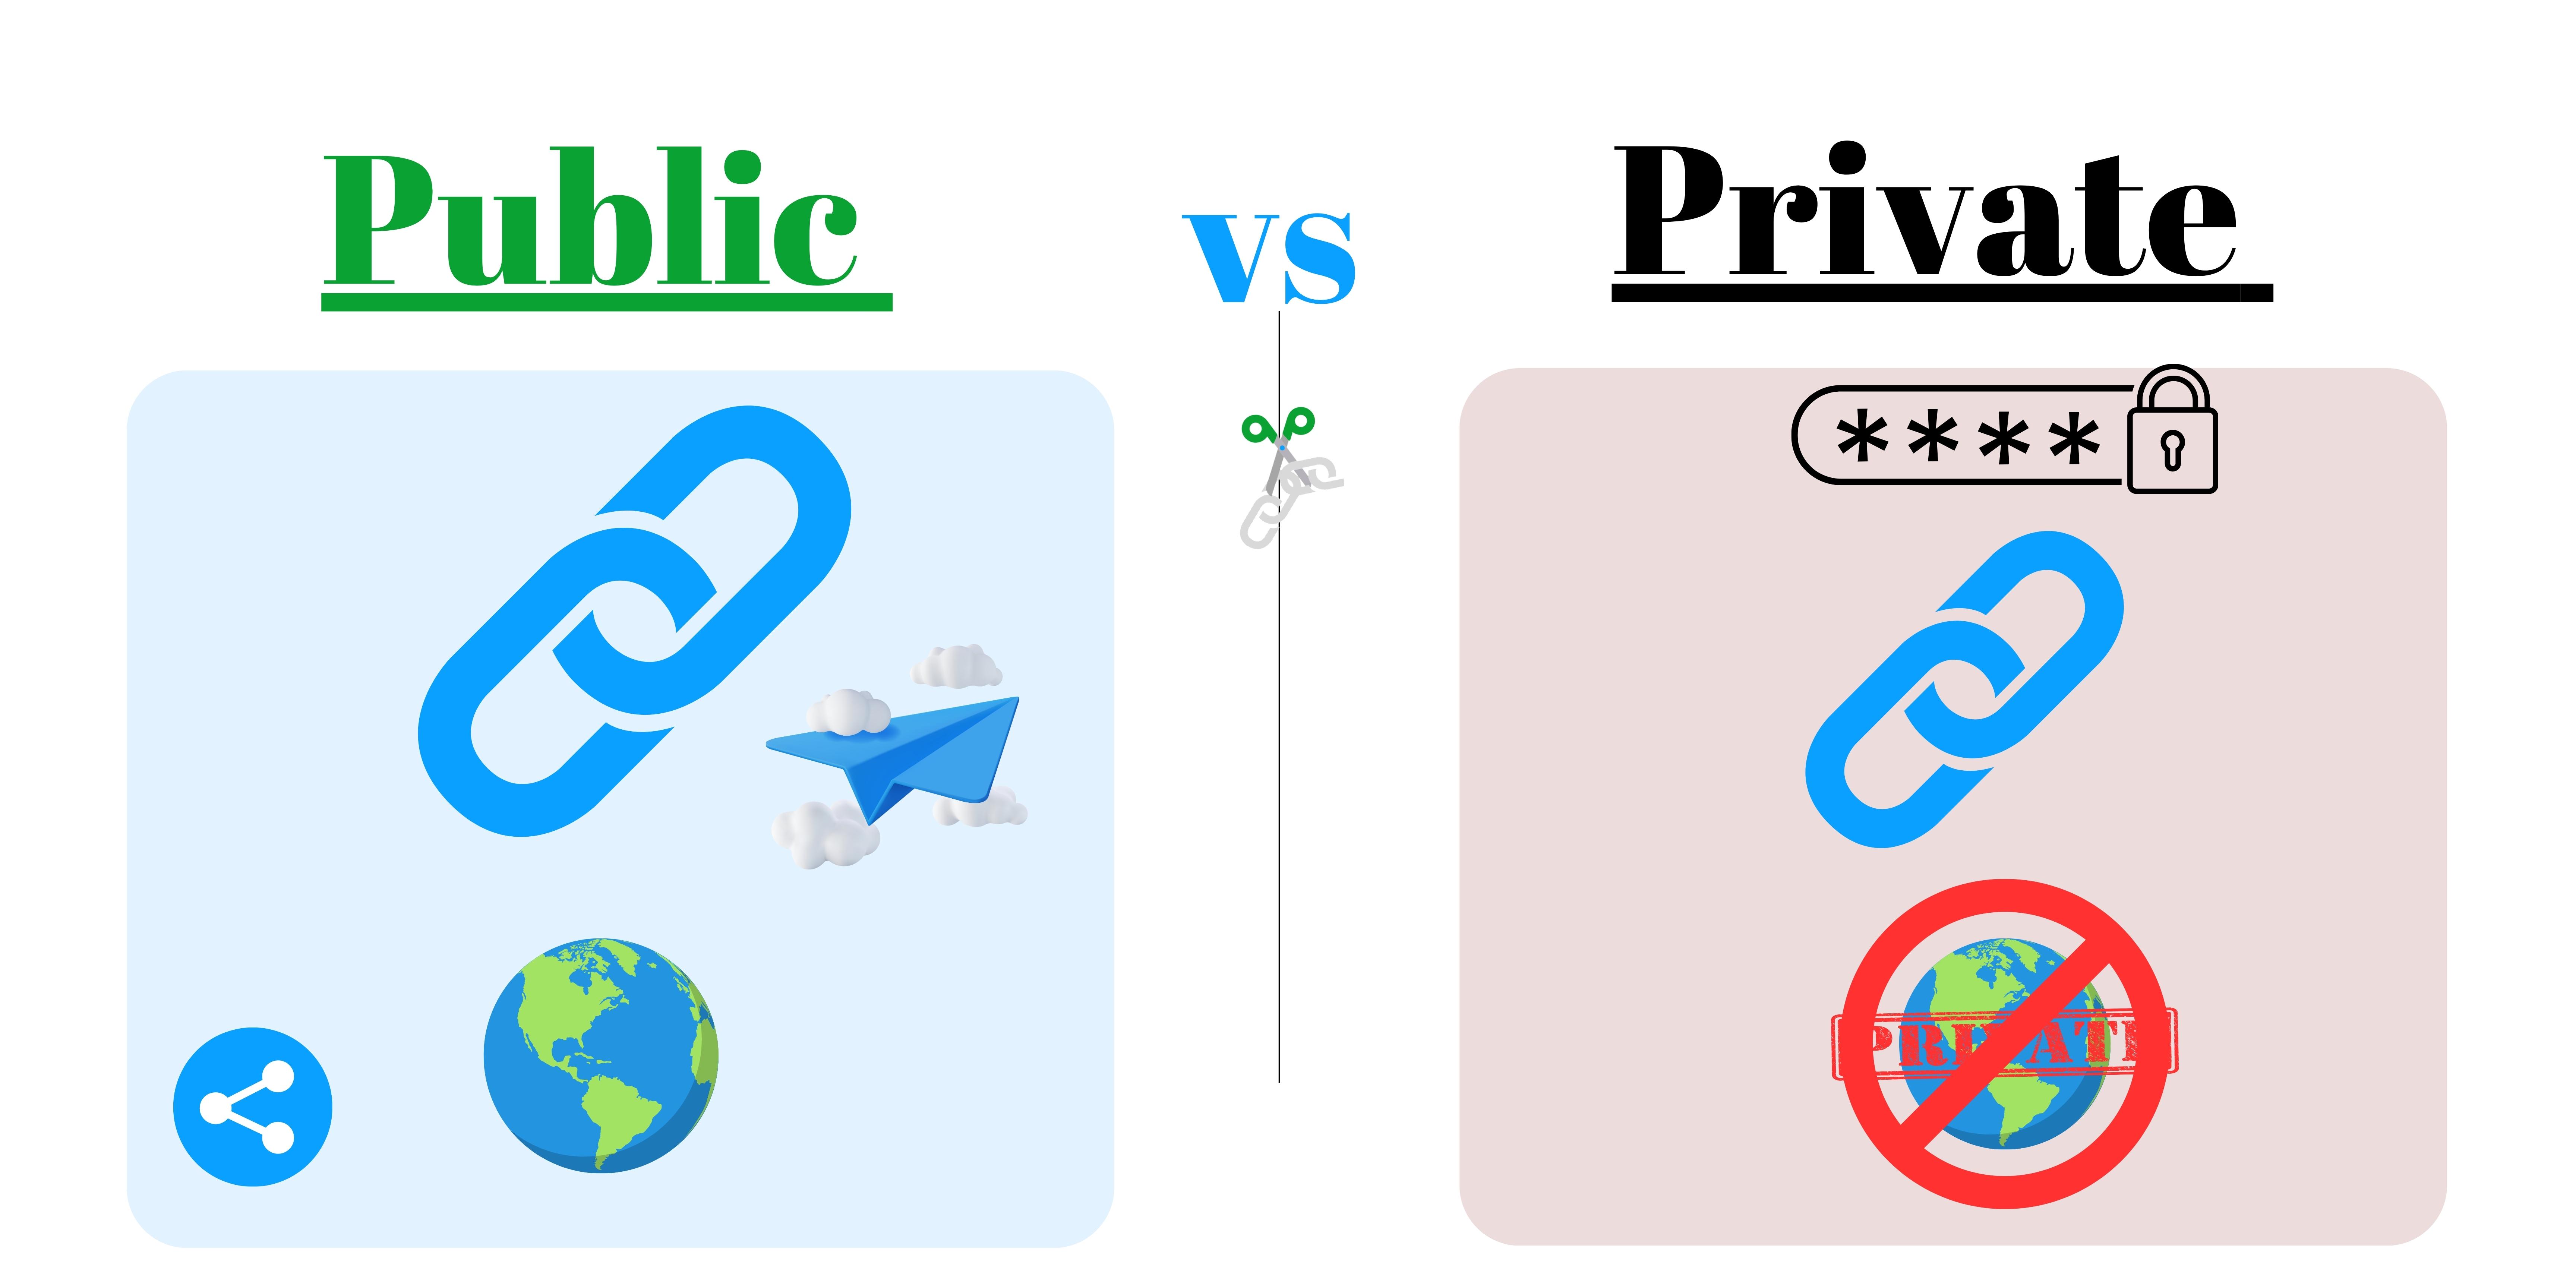 Public links vs Private links?